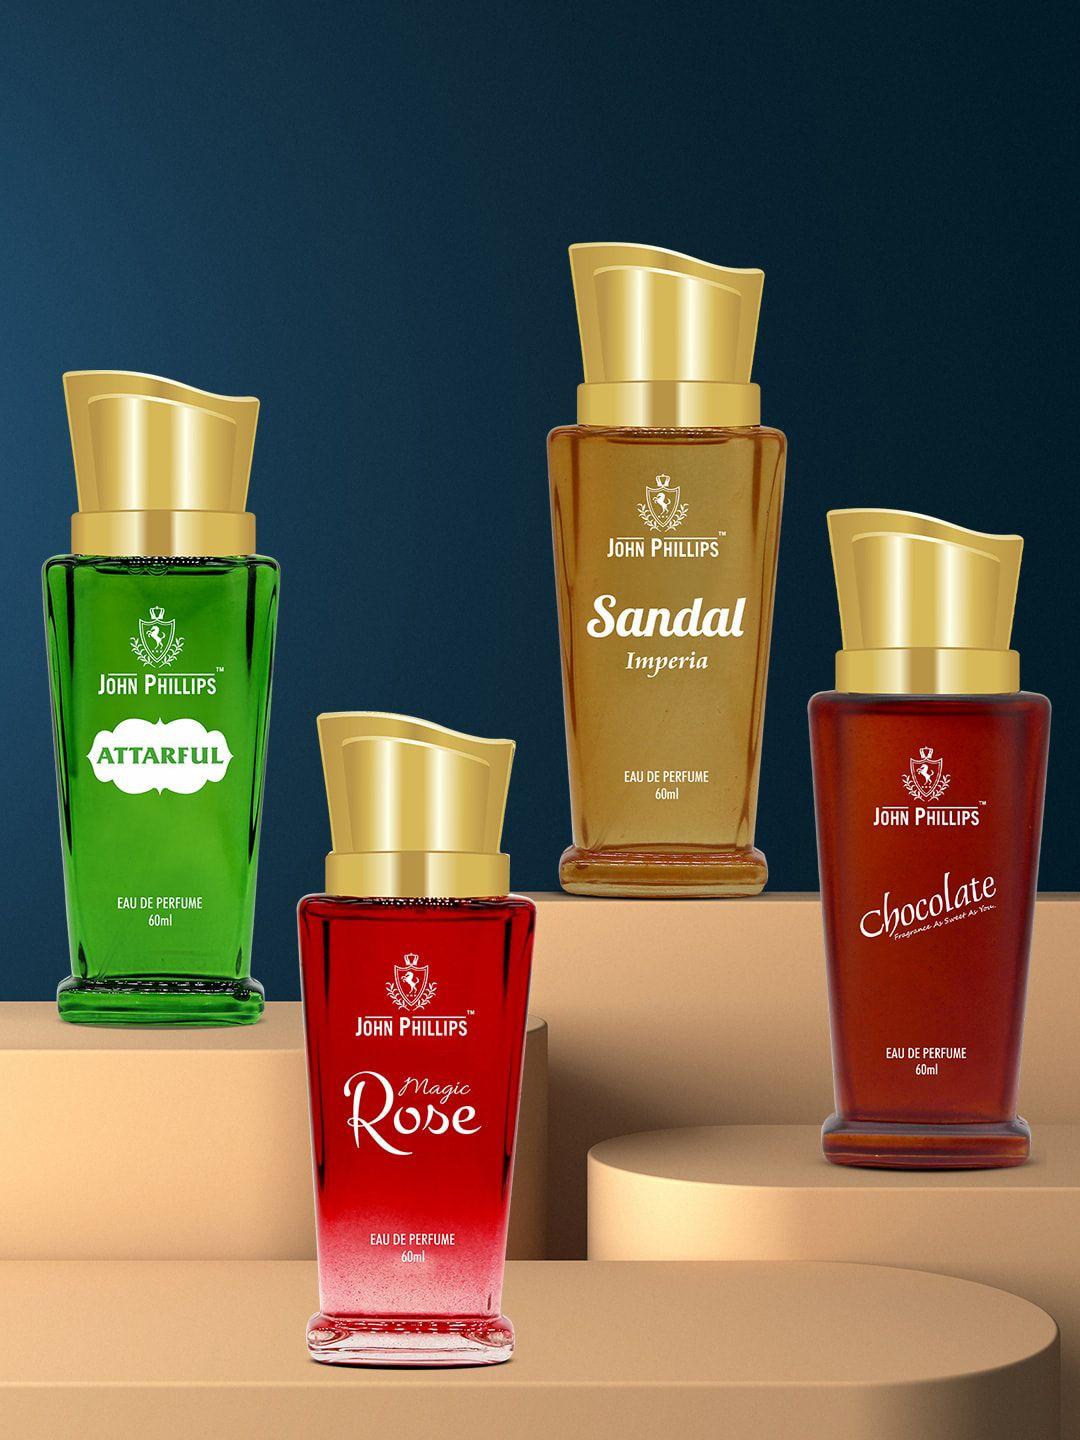 john phillips luxury set of 4 edp perfume 60ml each - sandal - attarful - rose - chocolate